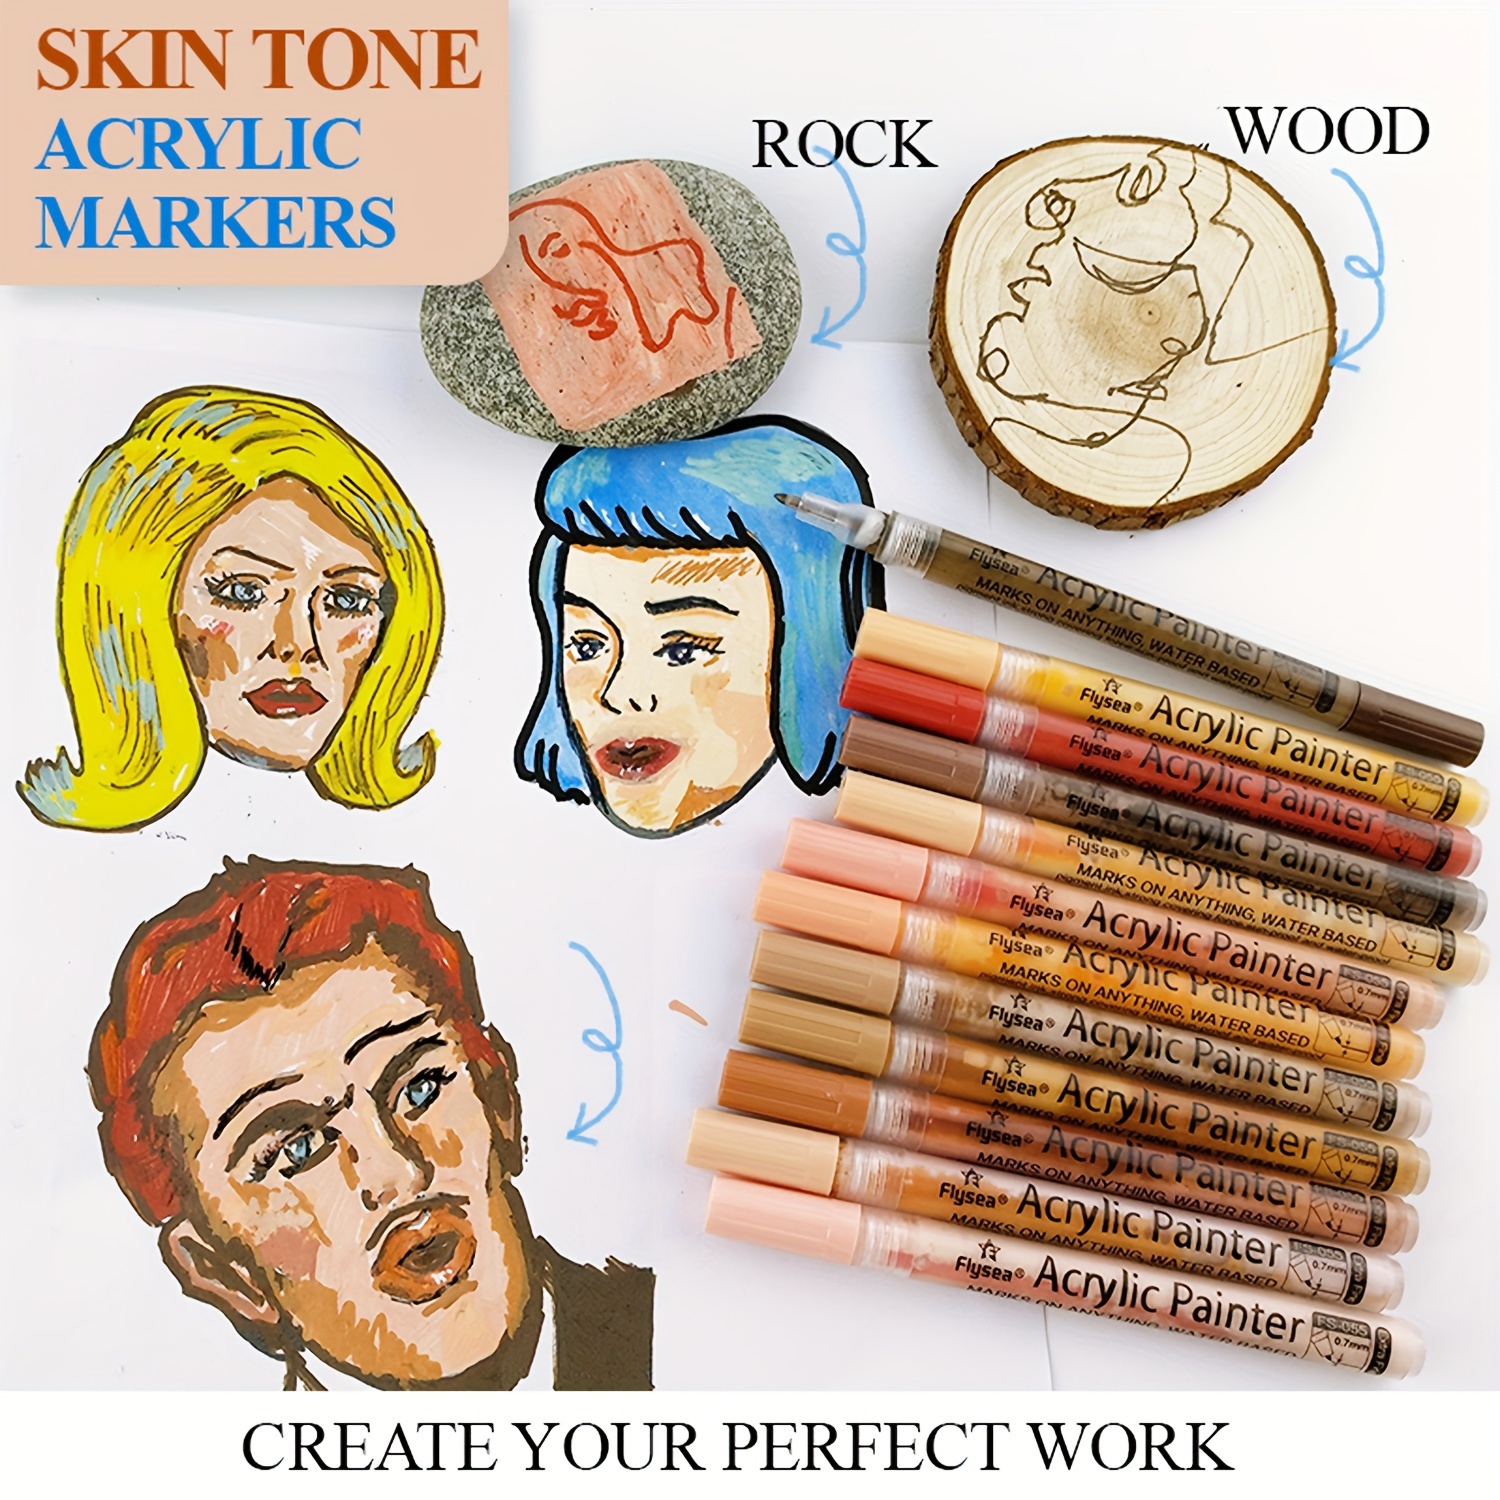 PINTAR Skin Tone Markers/Pens Medium Tip for Rock Painting, Wood, Glass -  Pack of 20, 5.0 mm, 1 - Harris Teeter